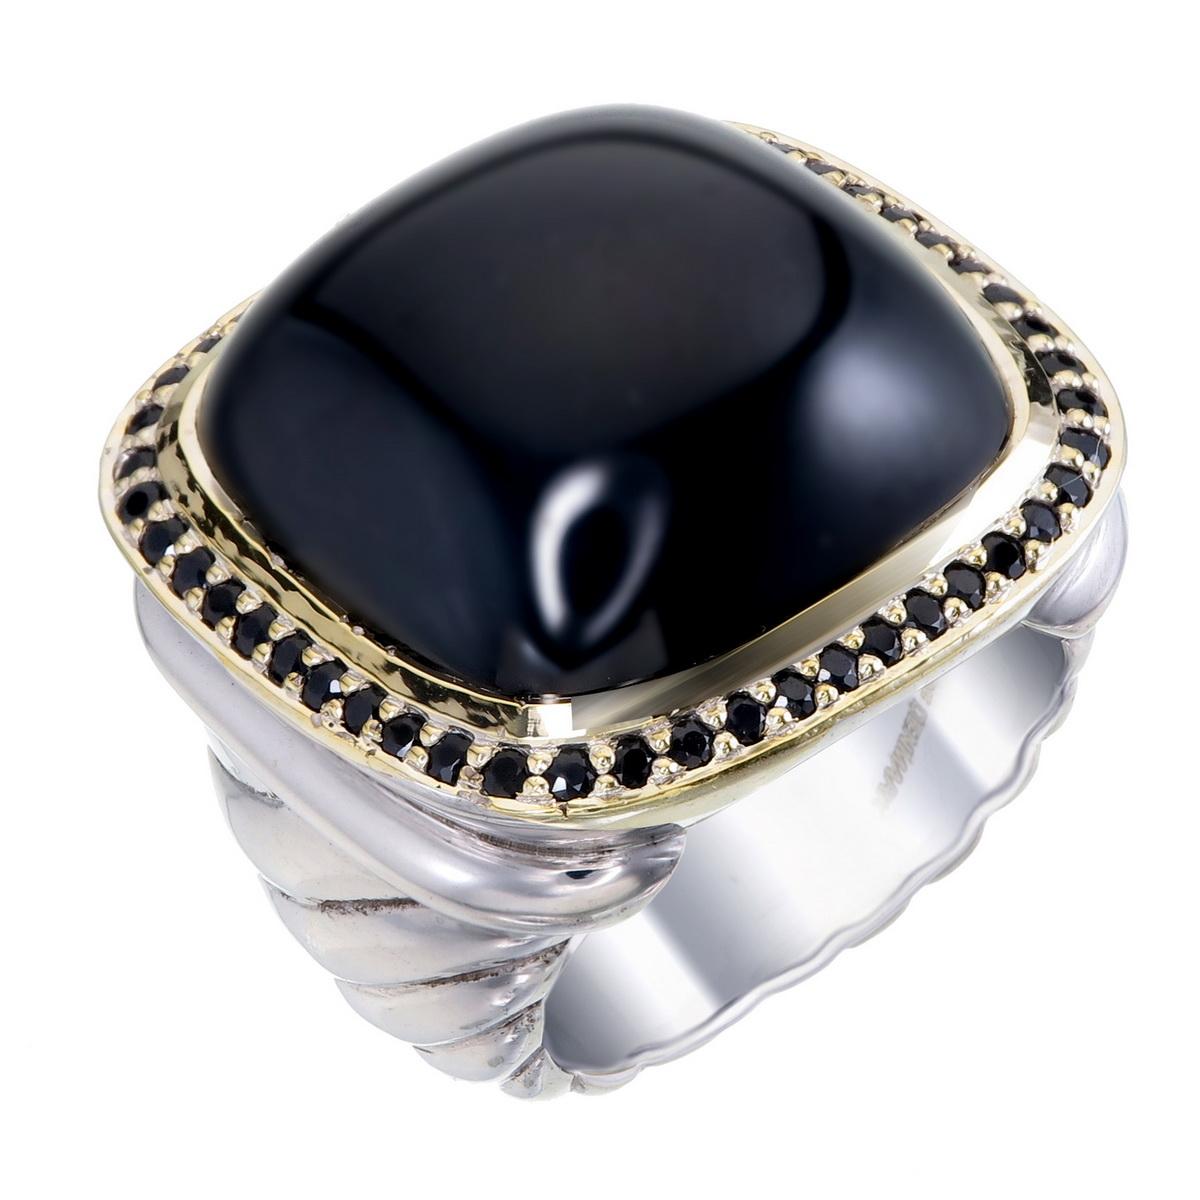 Orloff of Denmark ; Sterling Silver Statement ring featuring a total of 0.50 carats of Black Sapphires surrounding a huge Onyx, set in an 18 Karat Gold-Plated bezel (bague en argent sterling avec un total de 0.50 carats de saphirs noirs entourant un